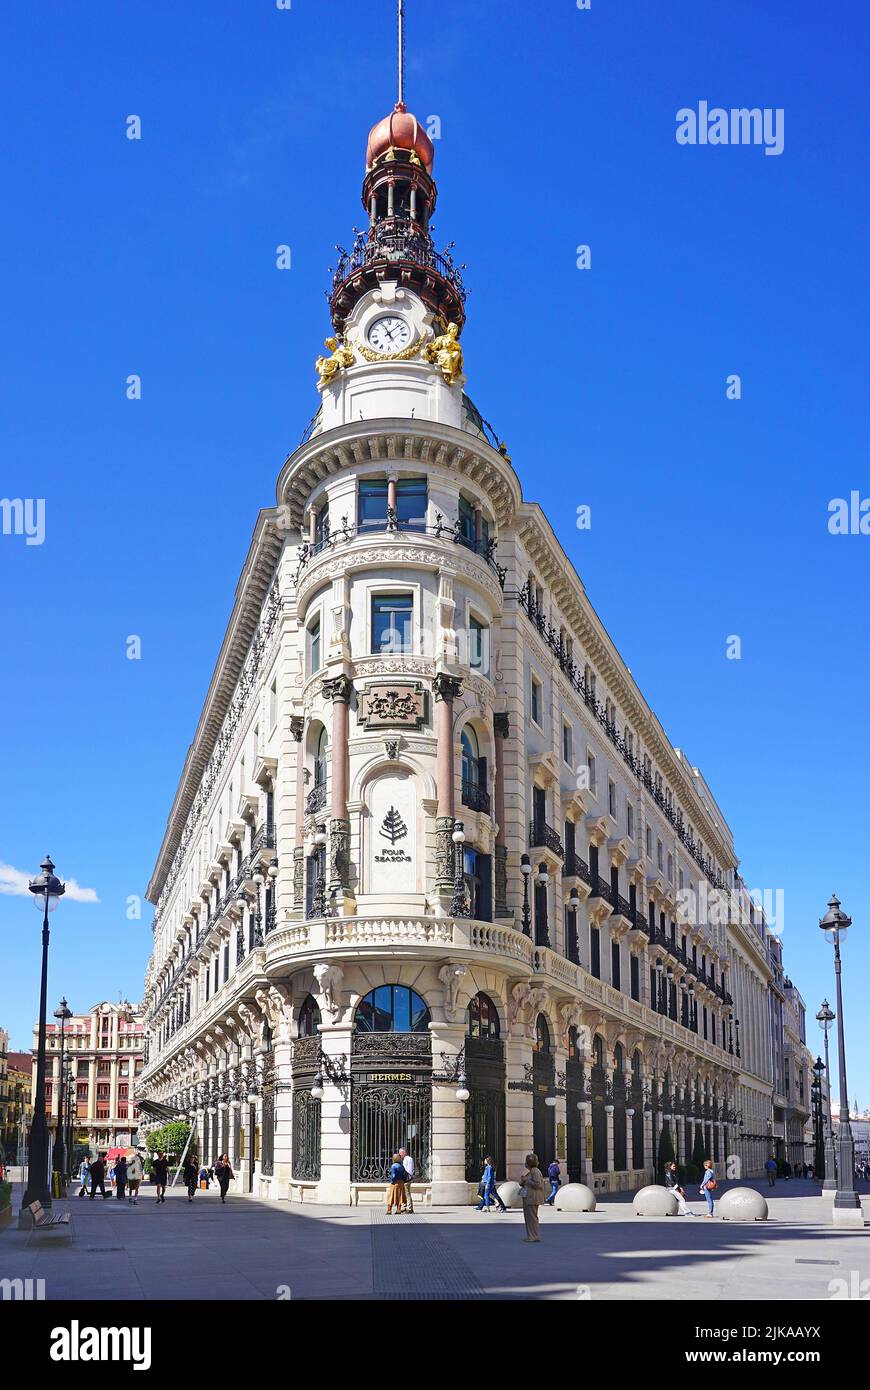 The Metropolis Building aka Edificio Metrópolis in Madrid Spain. Stock Photo